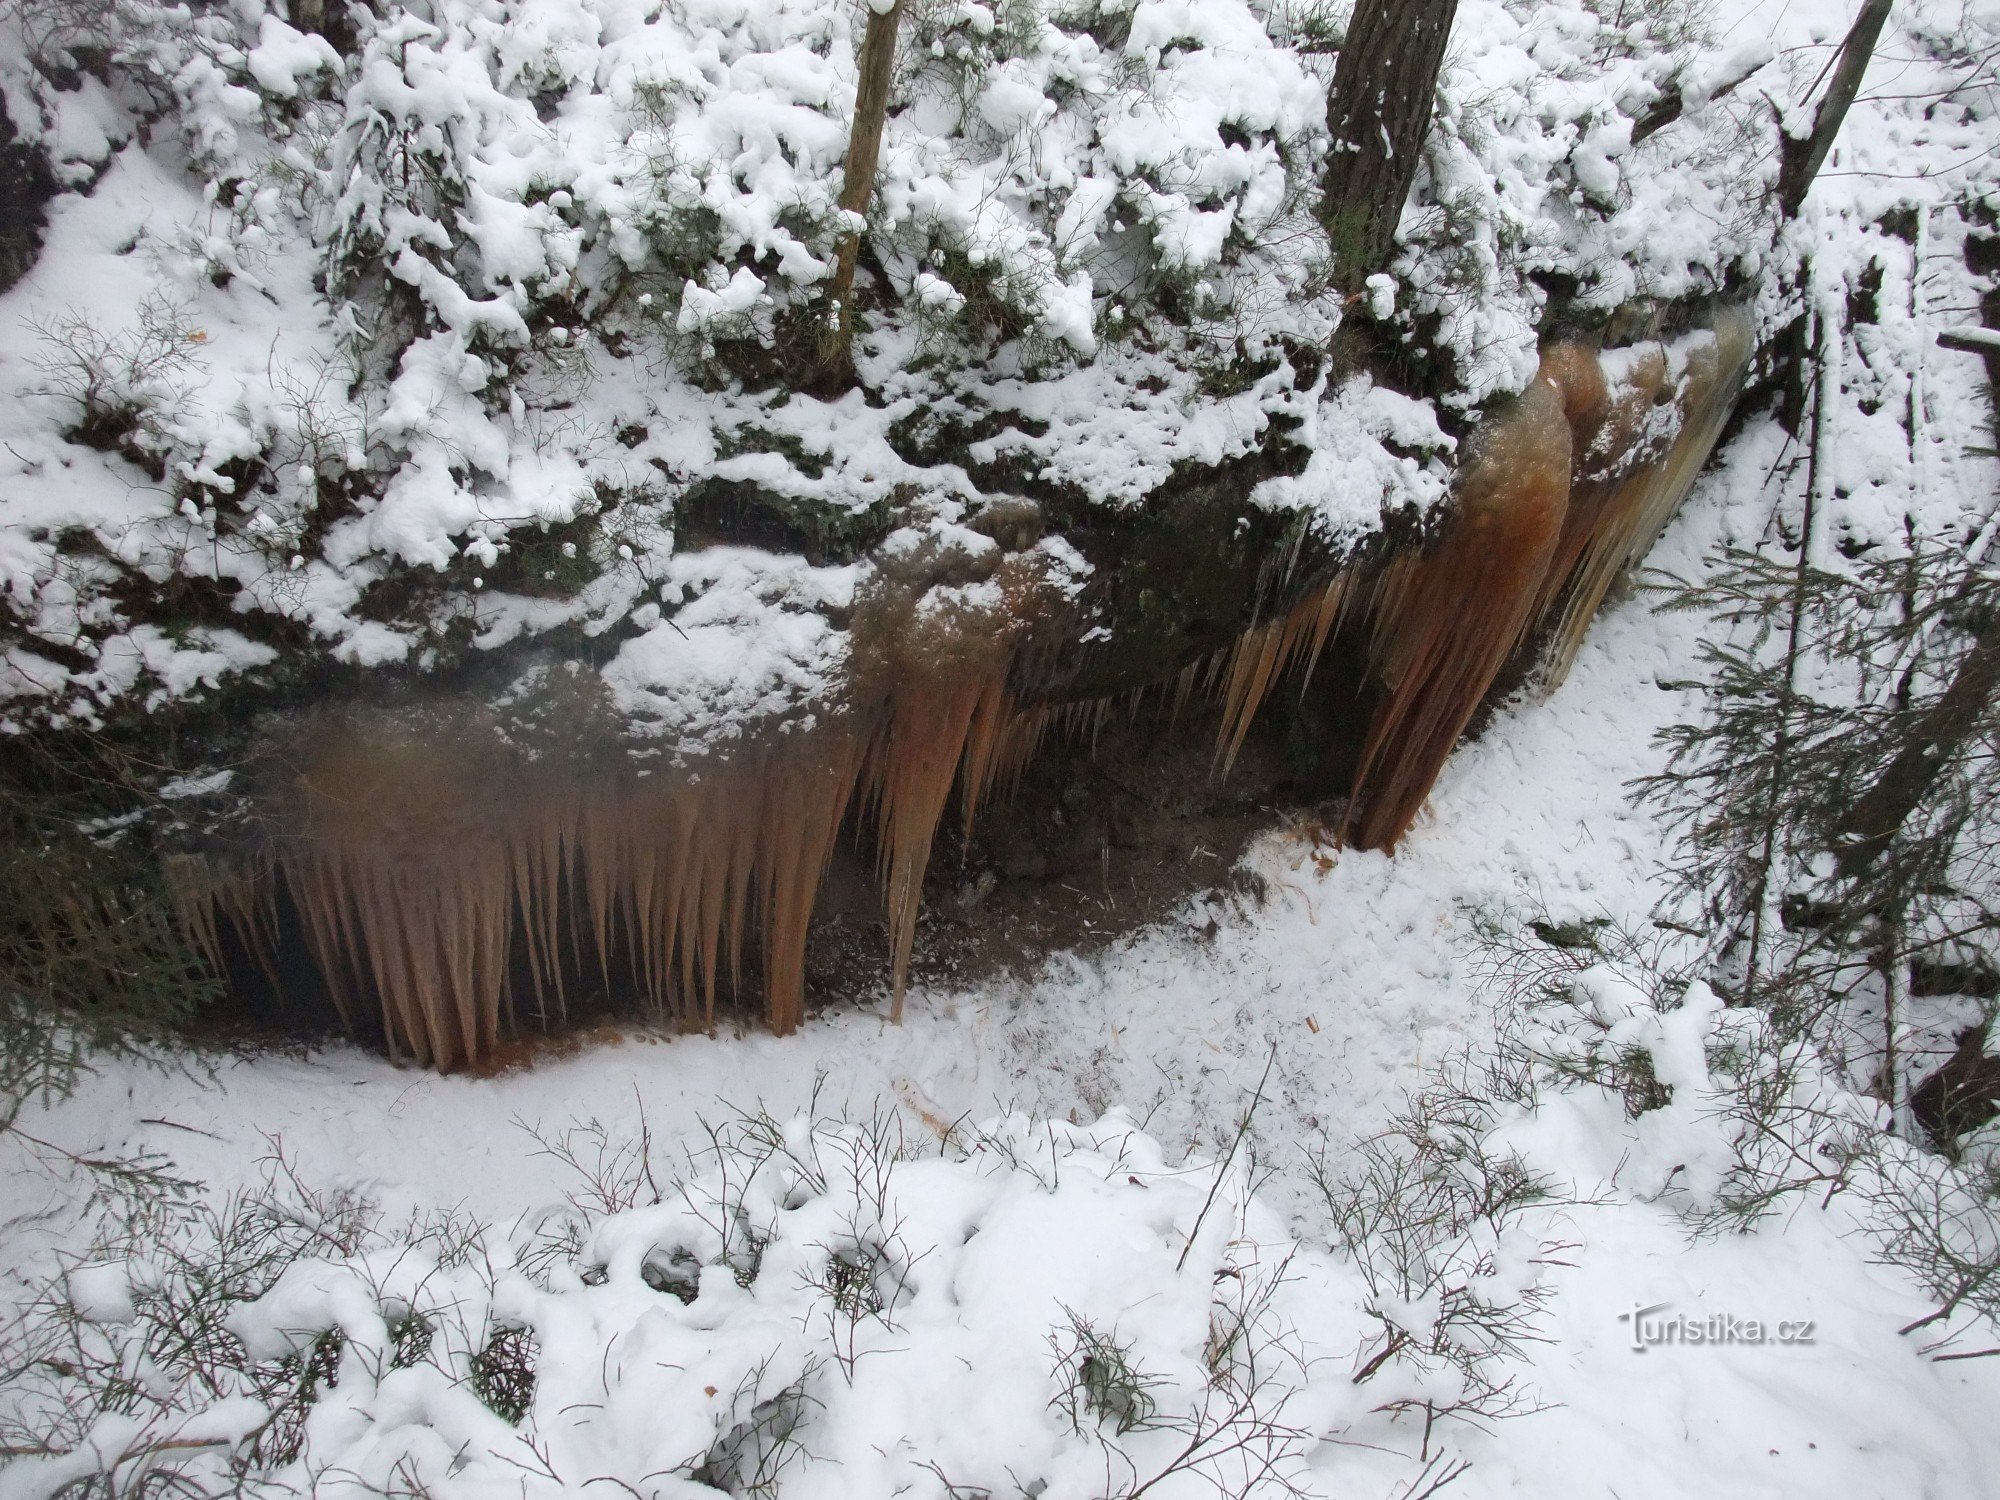 Icefalls near Brtnické Castle